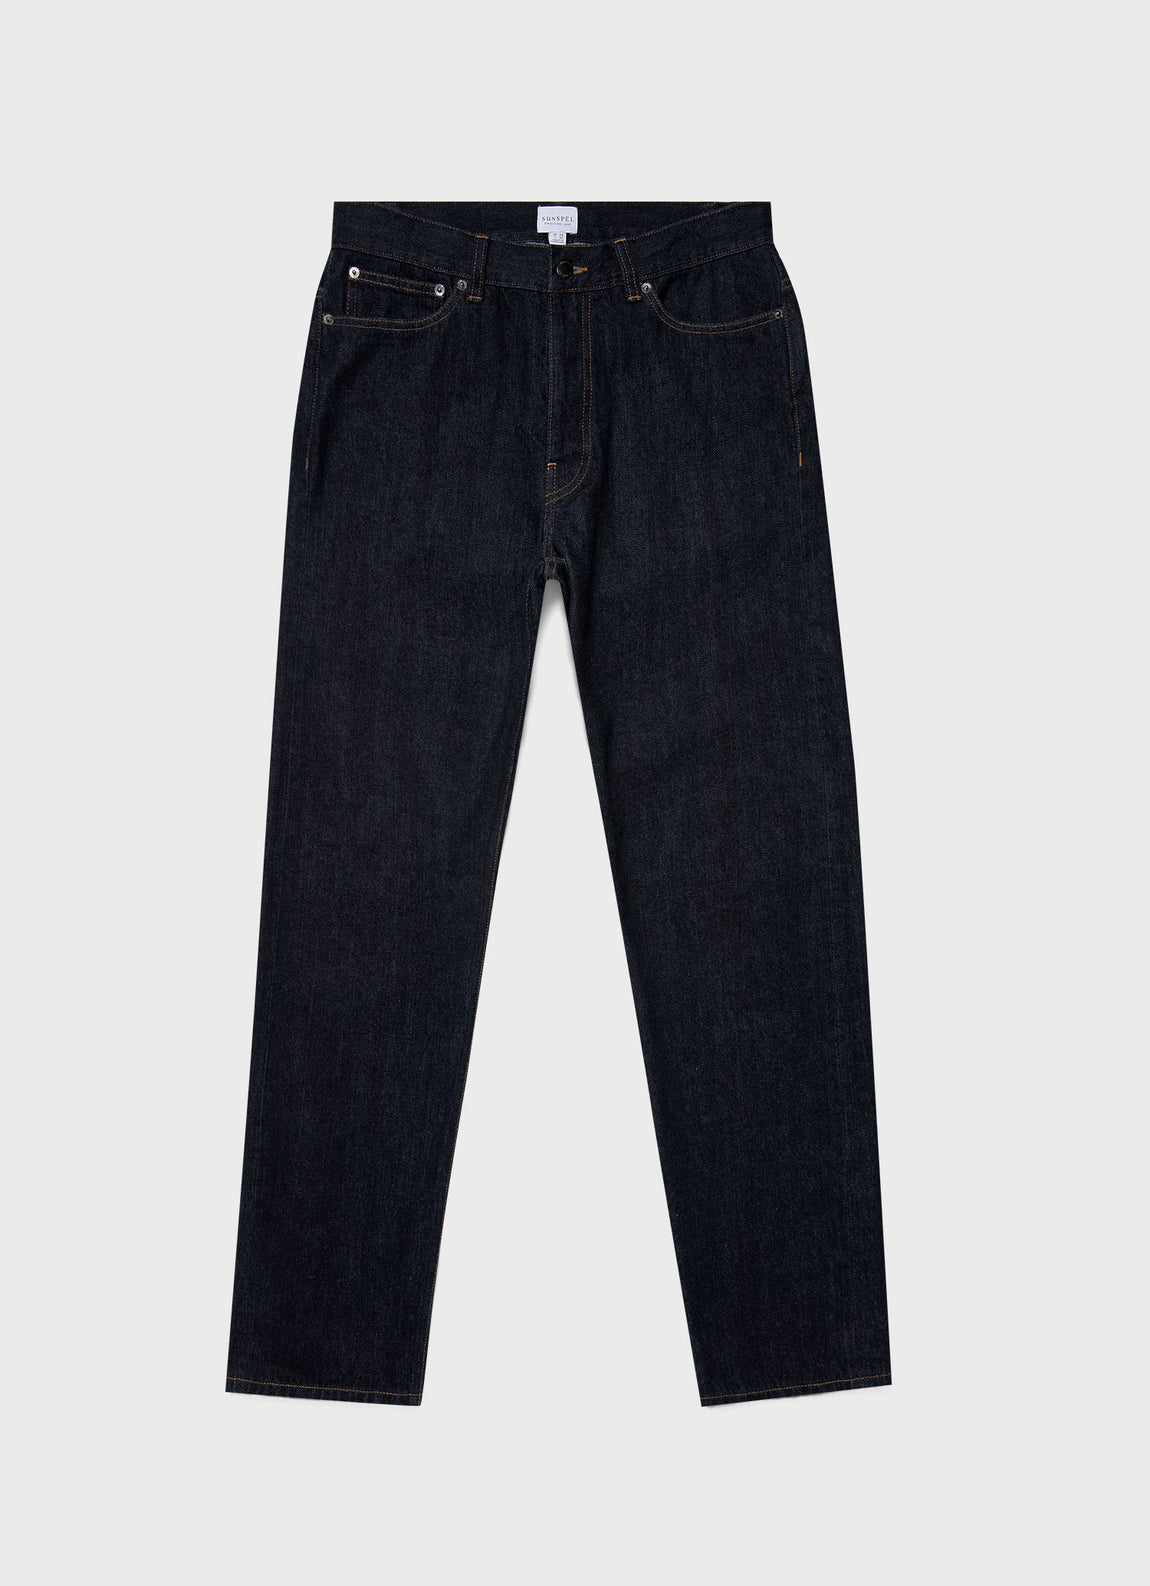 Men's 13oz Japanese Selvedge Denim Jeans in Rinse Wash Denim | Sunspel